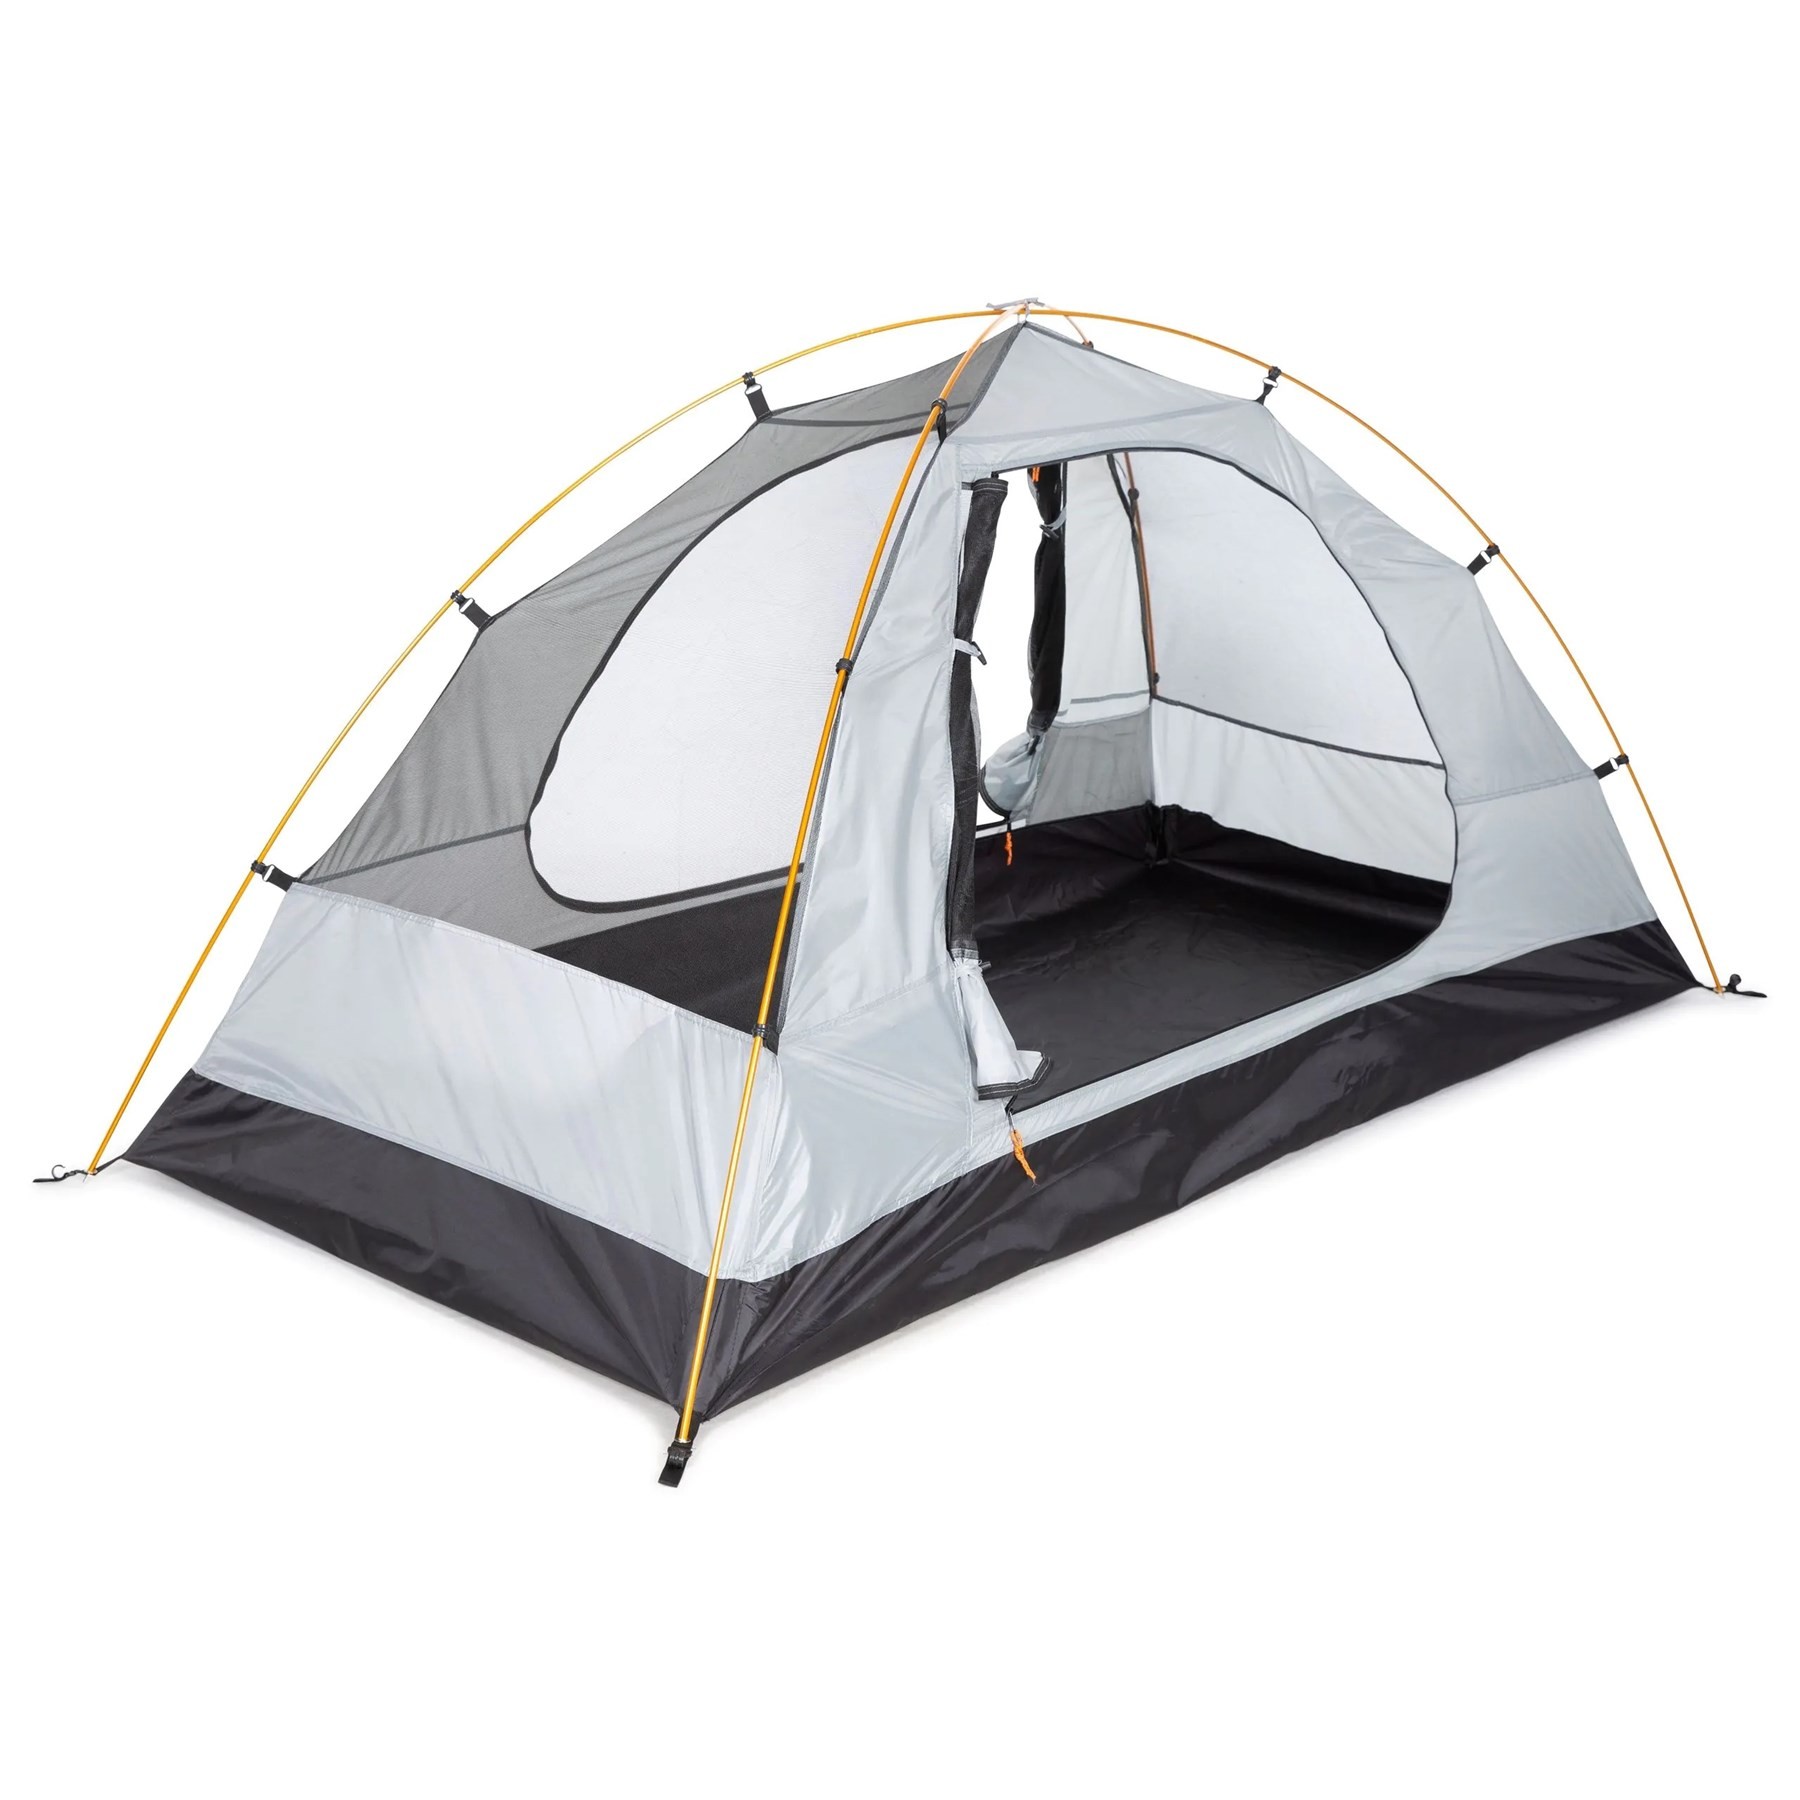 Trespass Unısex Battuta - Backpackıng Tent Olıve Çadır Uuactto10001-695